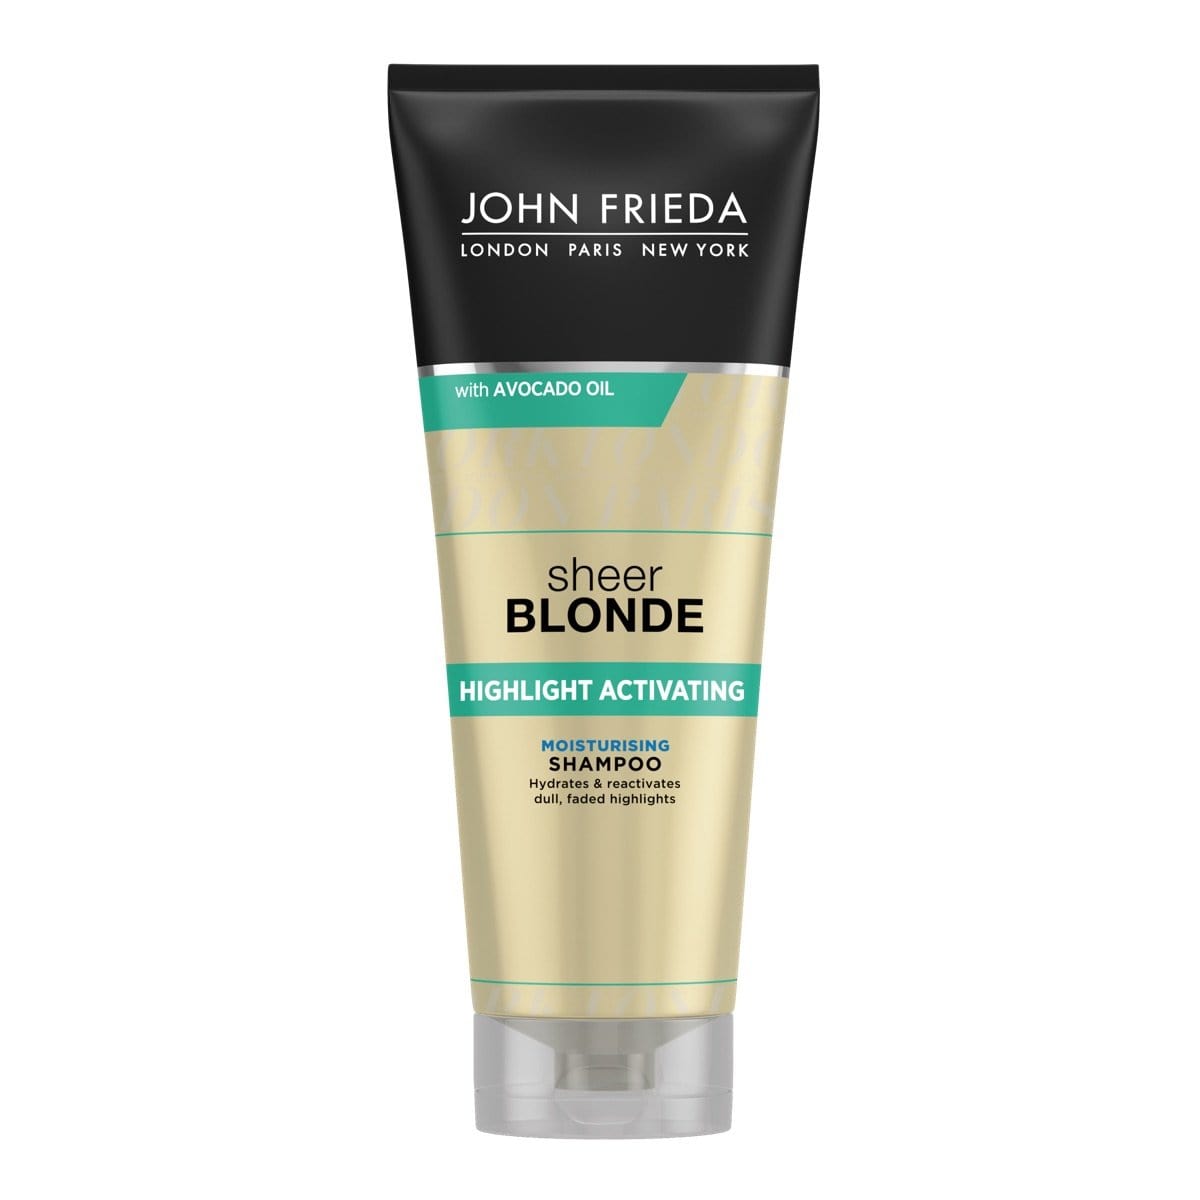 John Frieda Sheer Blonde Highlight Activating Moisturising Shampoo 250ml